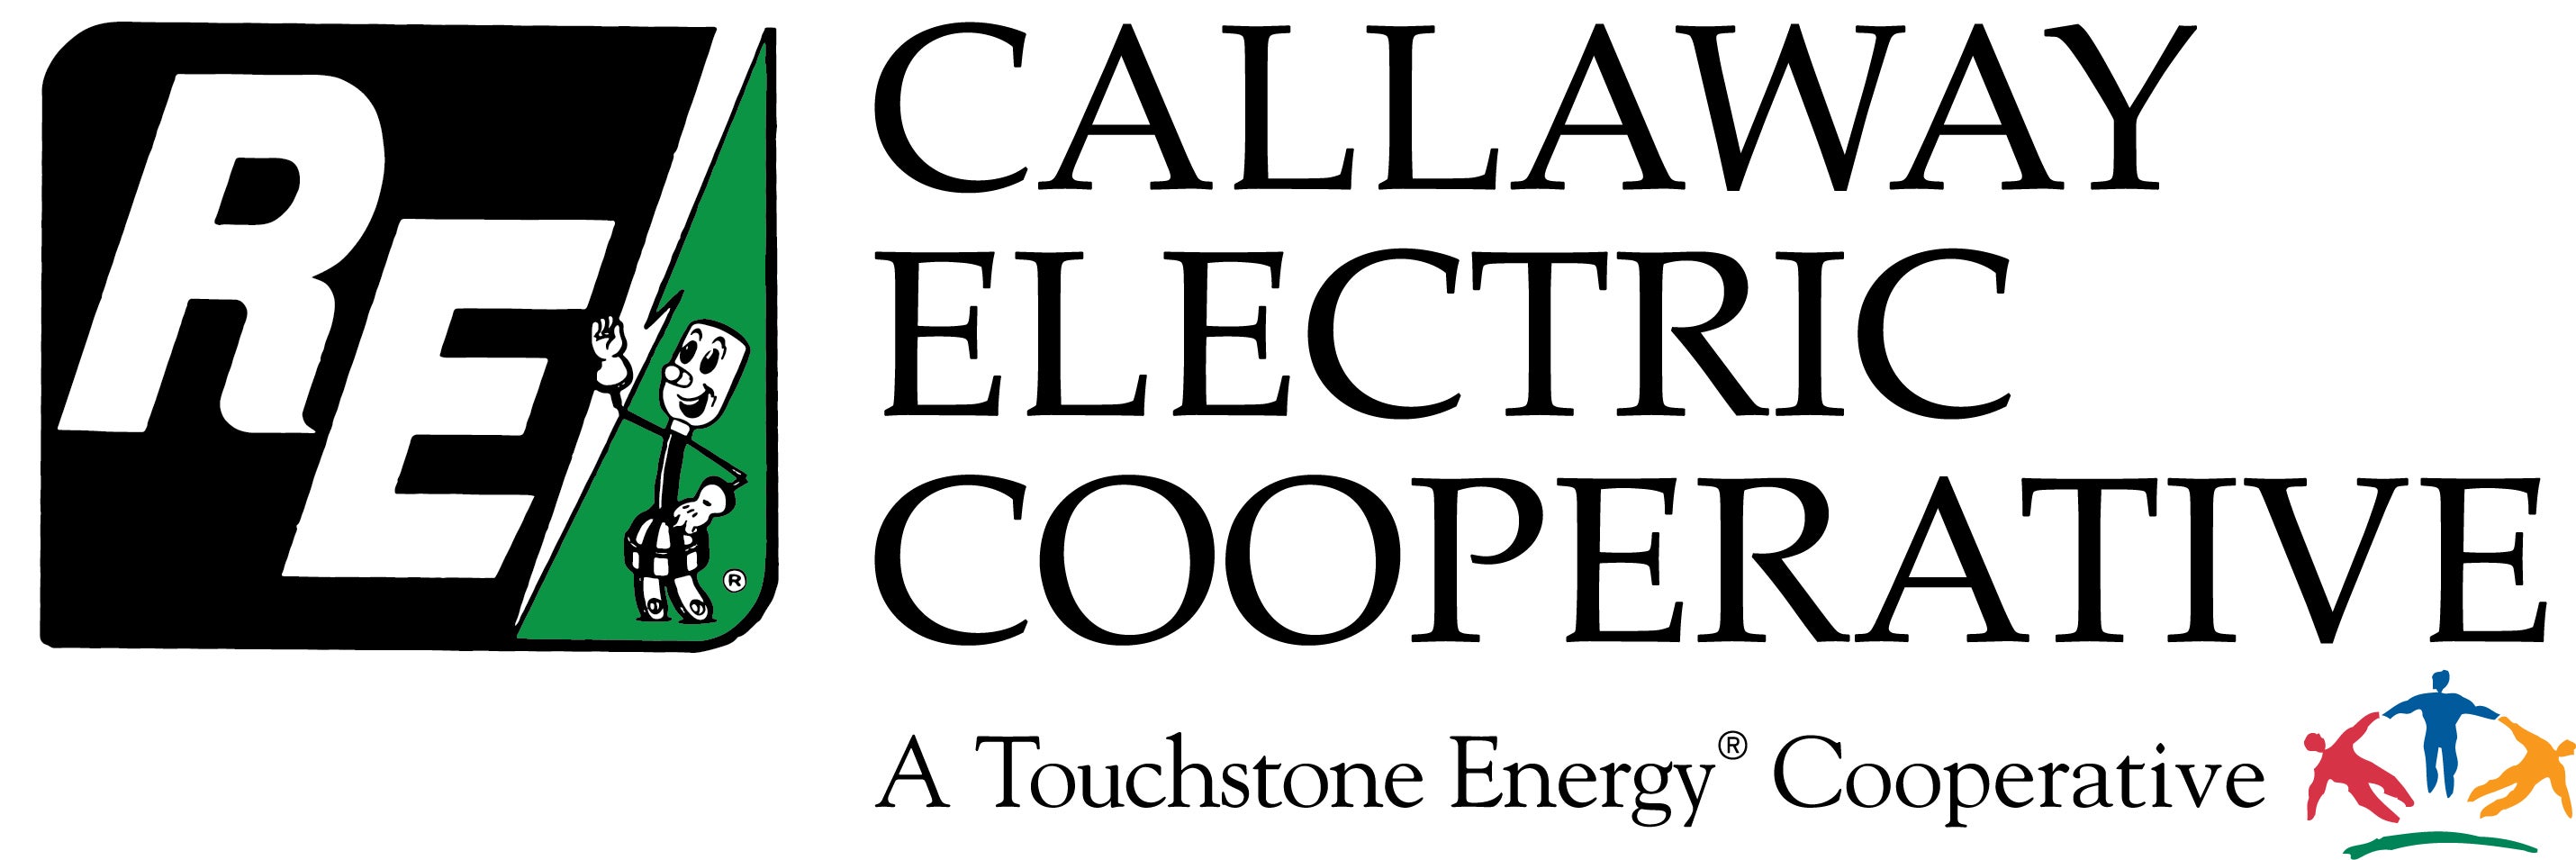 www.callawayelectric.com